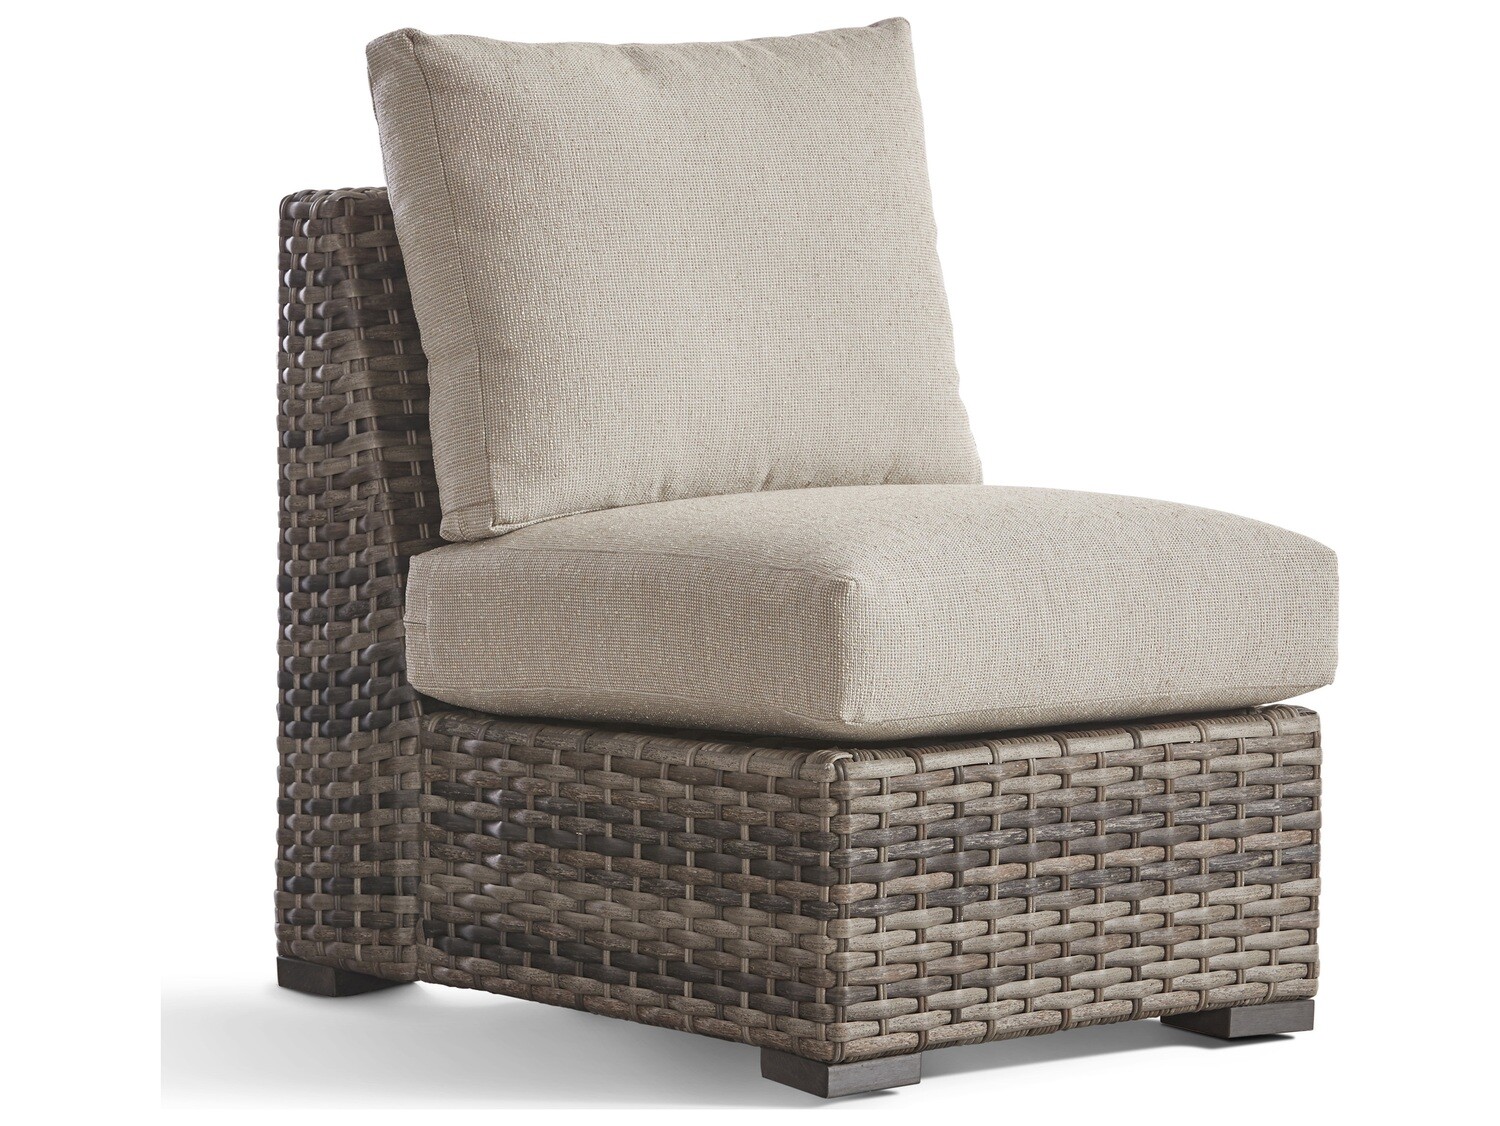 South Sea Rattan New Java Wicker Sandstone Modular Lounge Chair